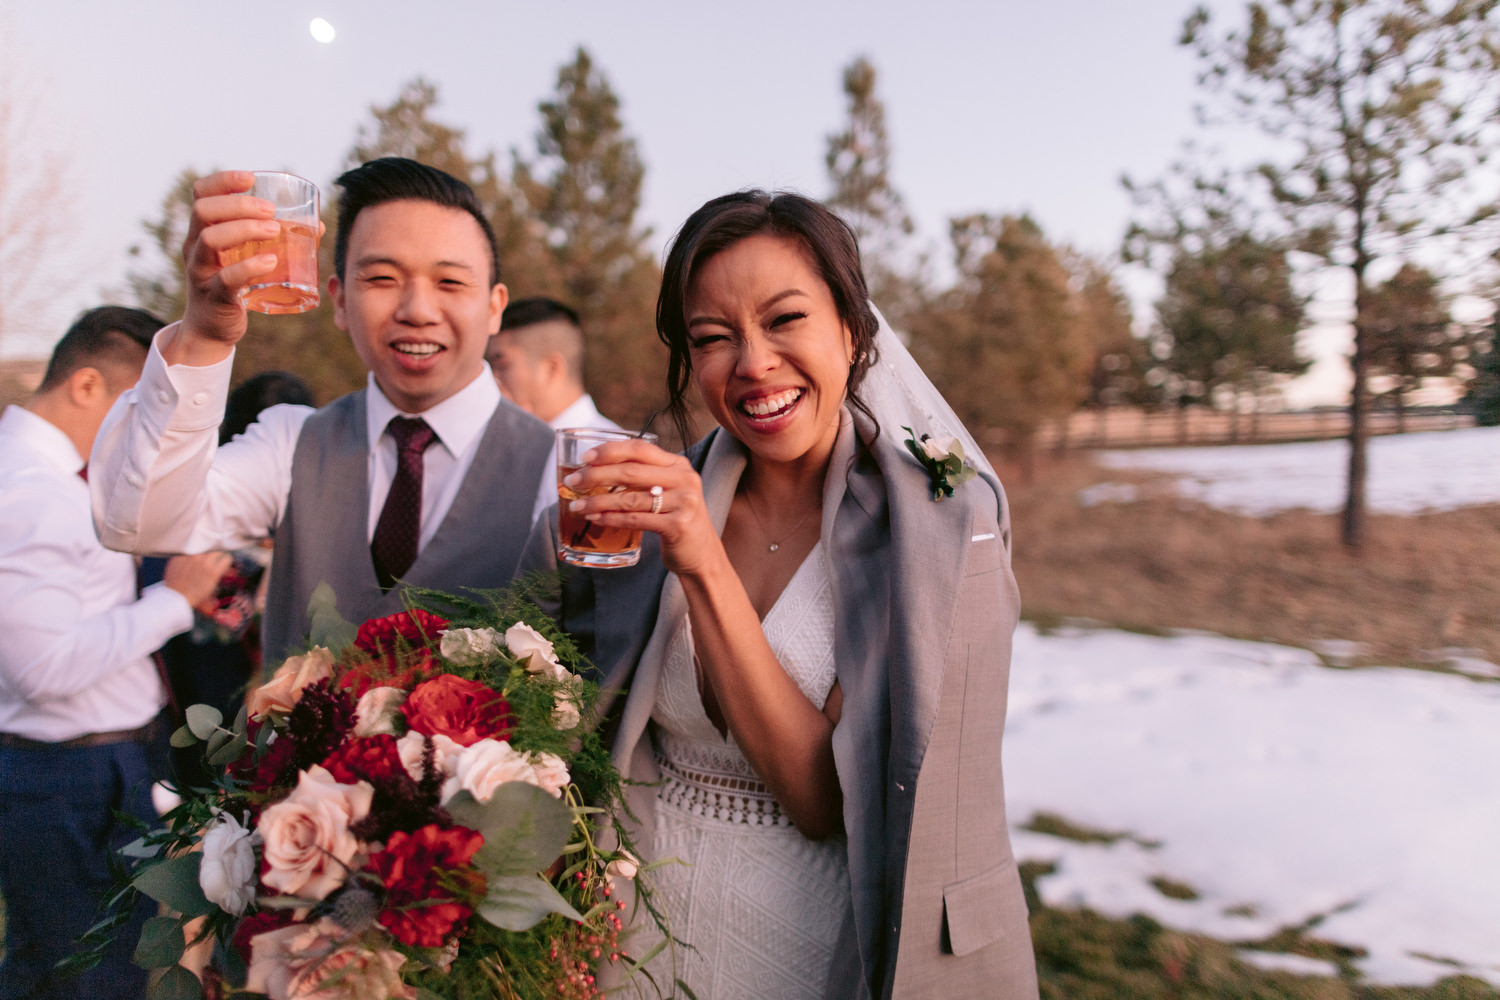 Cocktail hour, outdoor wedding